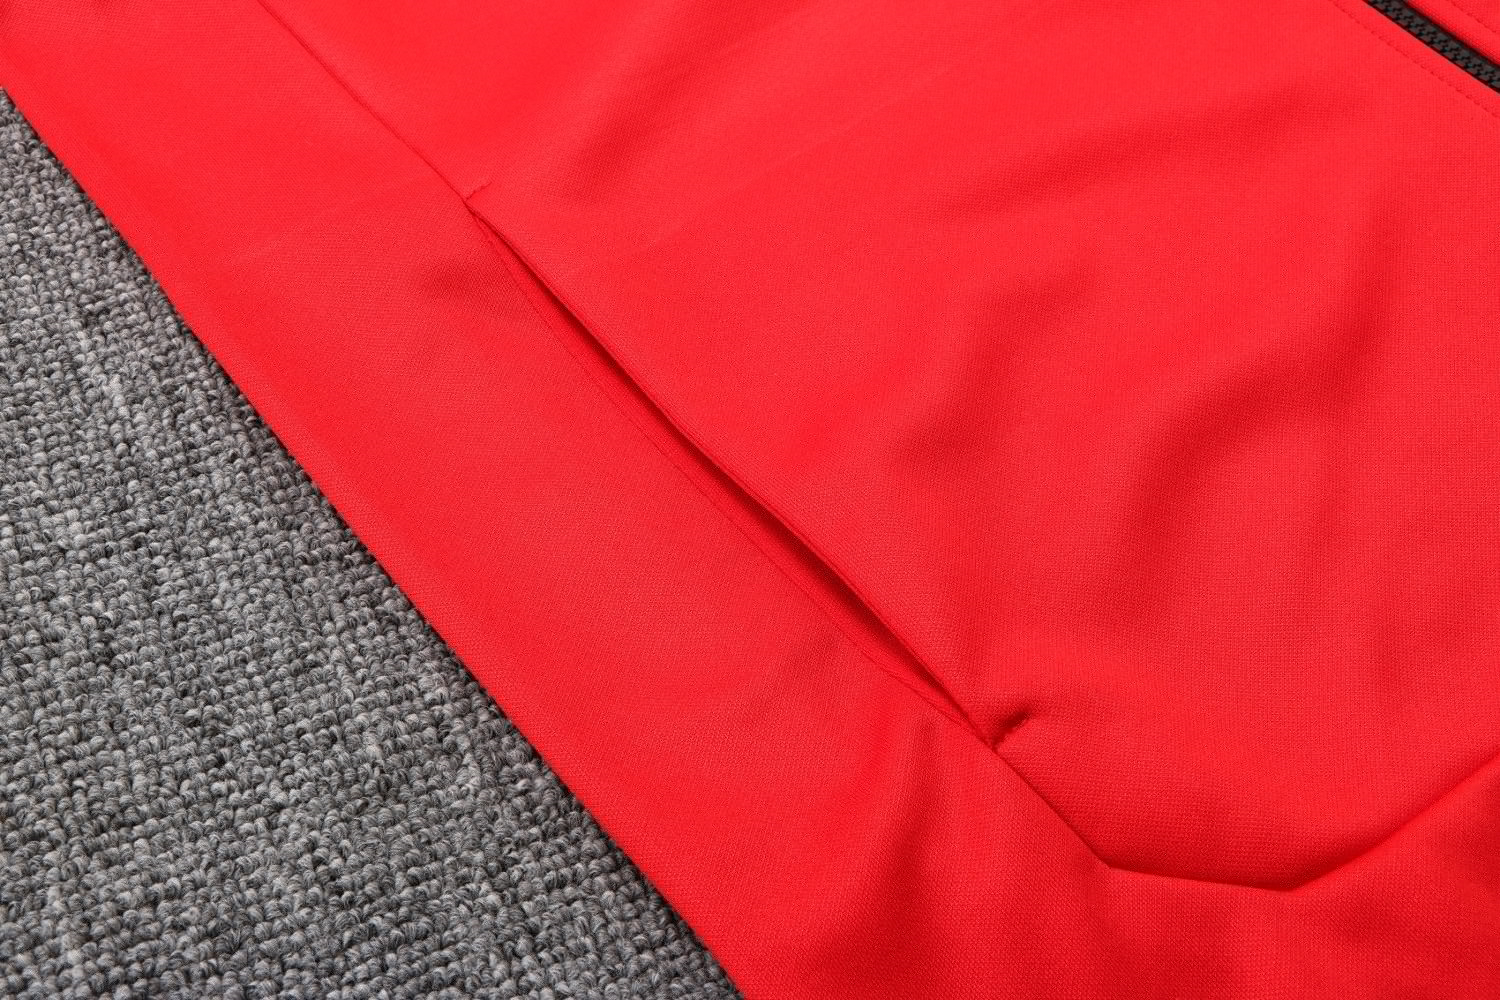 Men's Liverpool Hoodie Red Training Suit Jacket + Pants 22/23